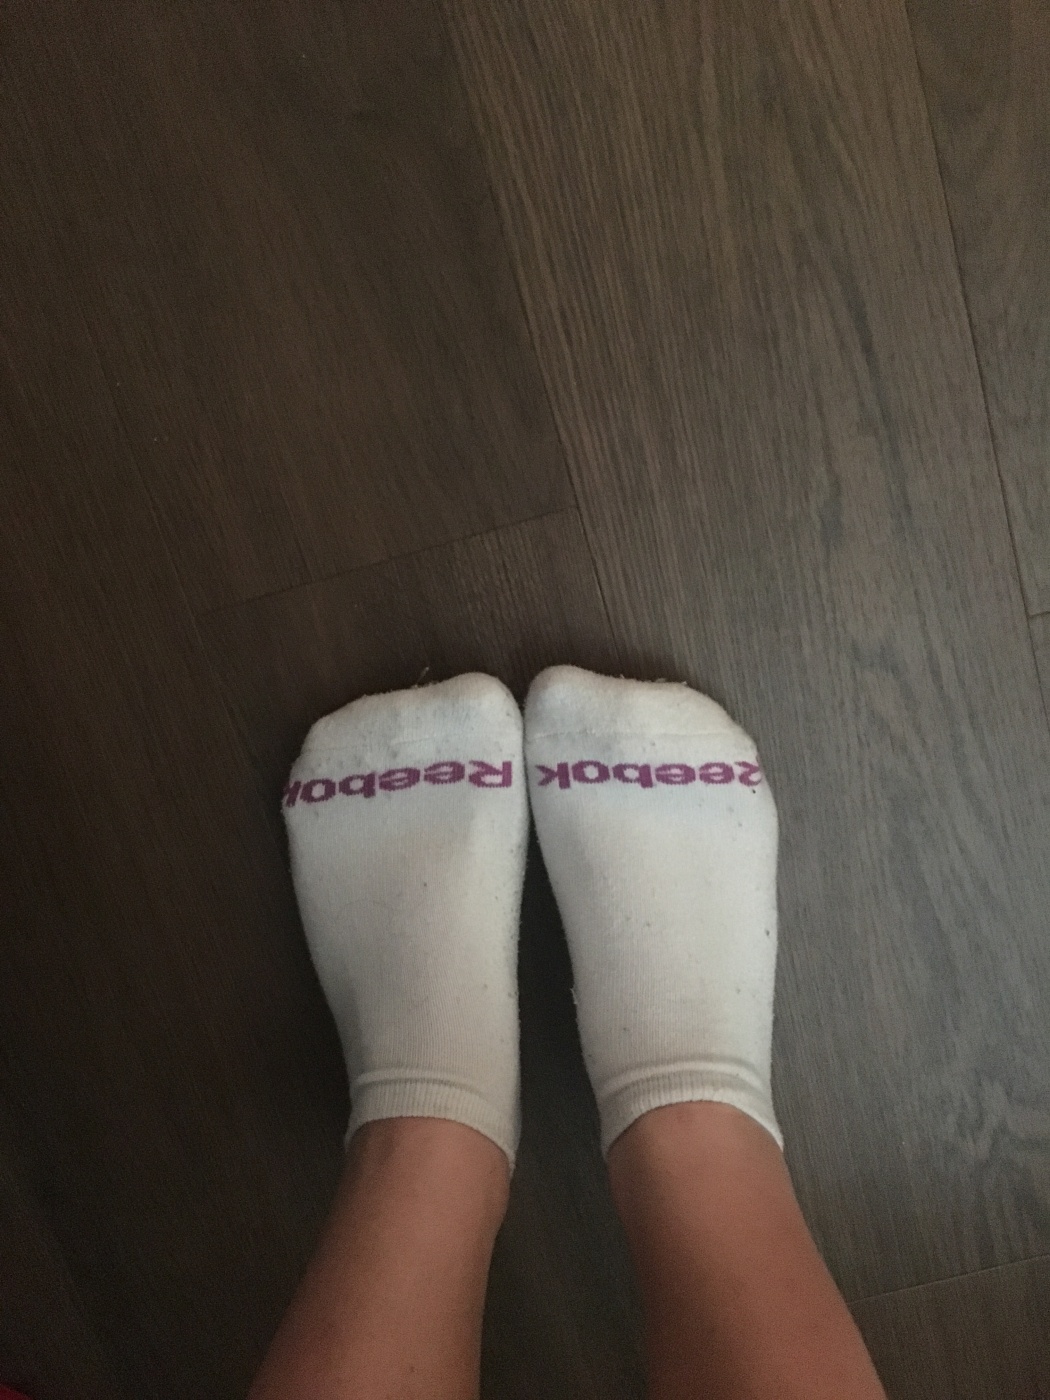 Worn white socks